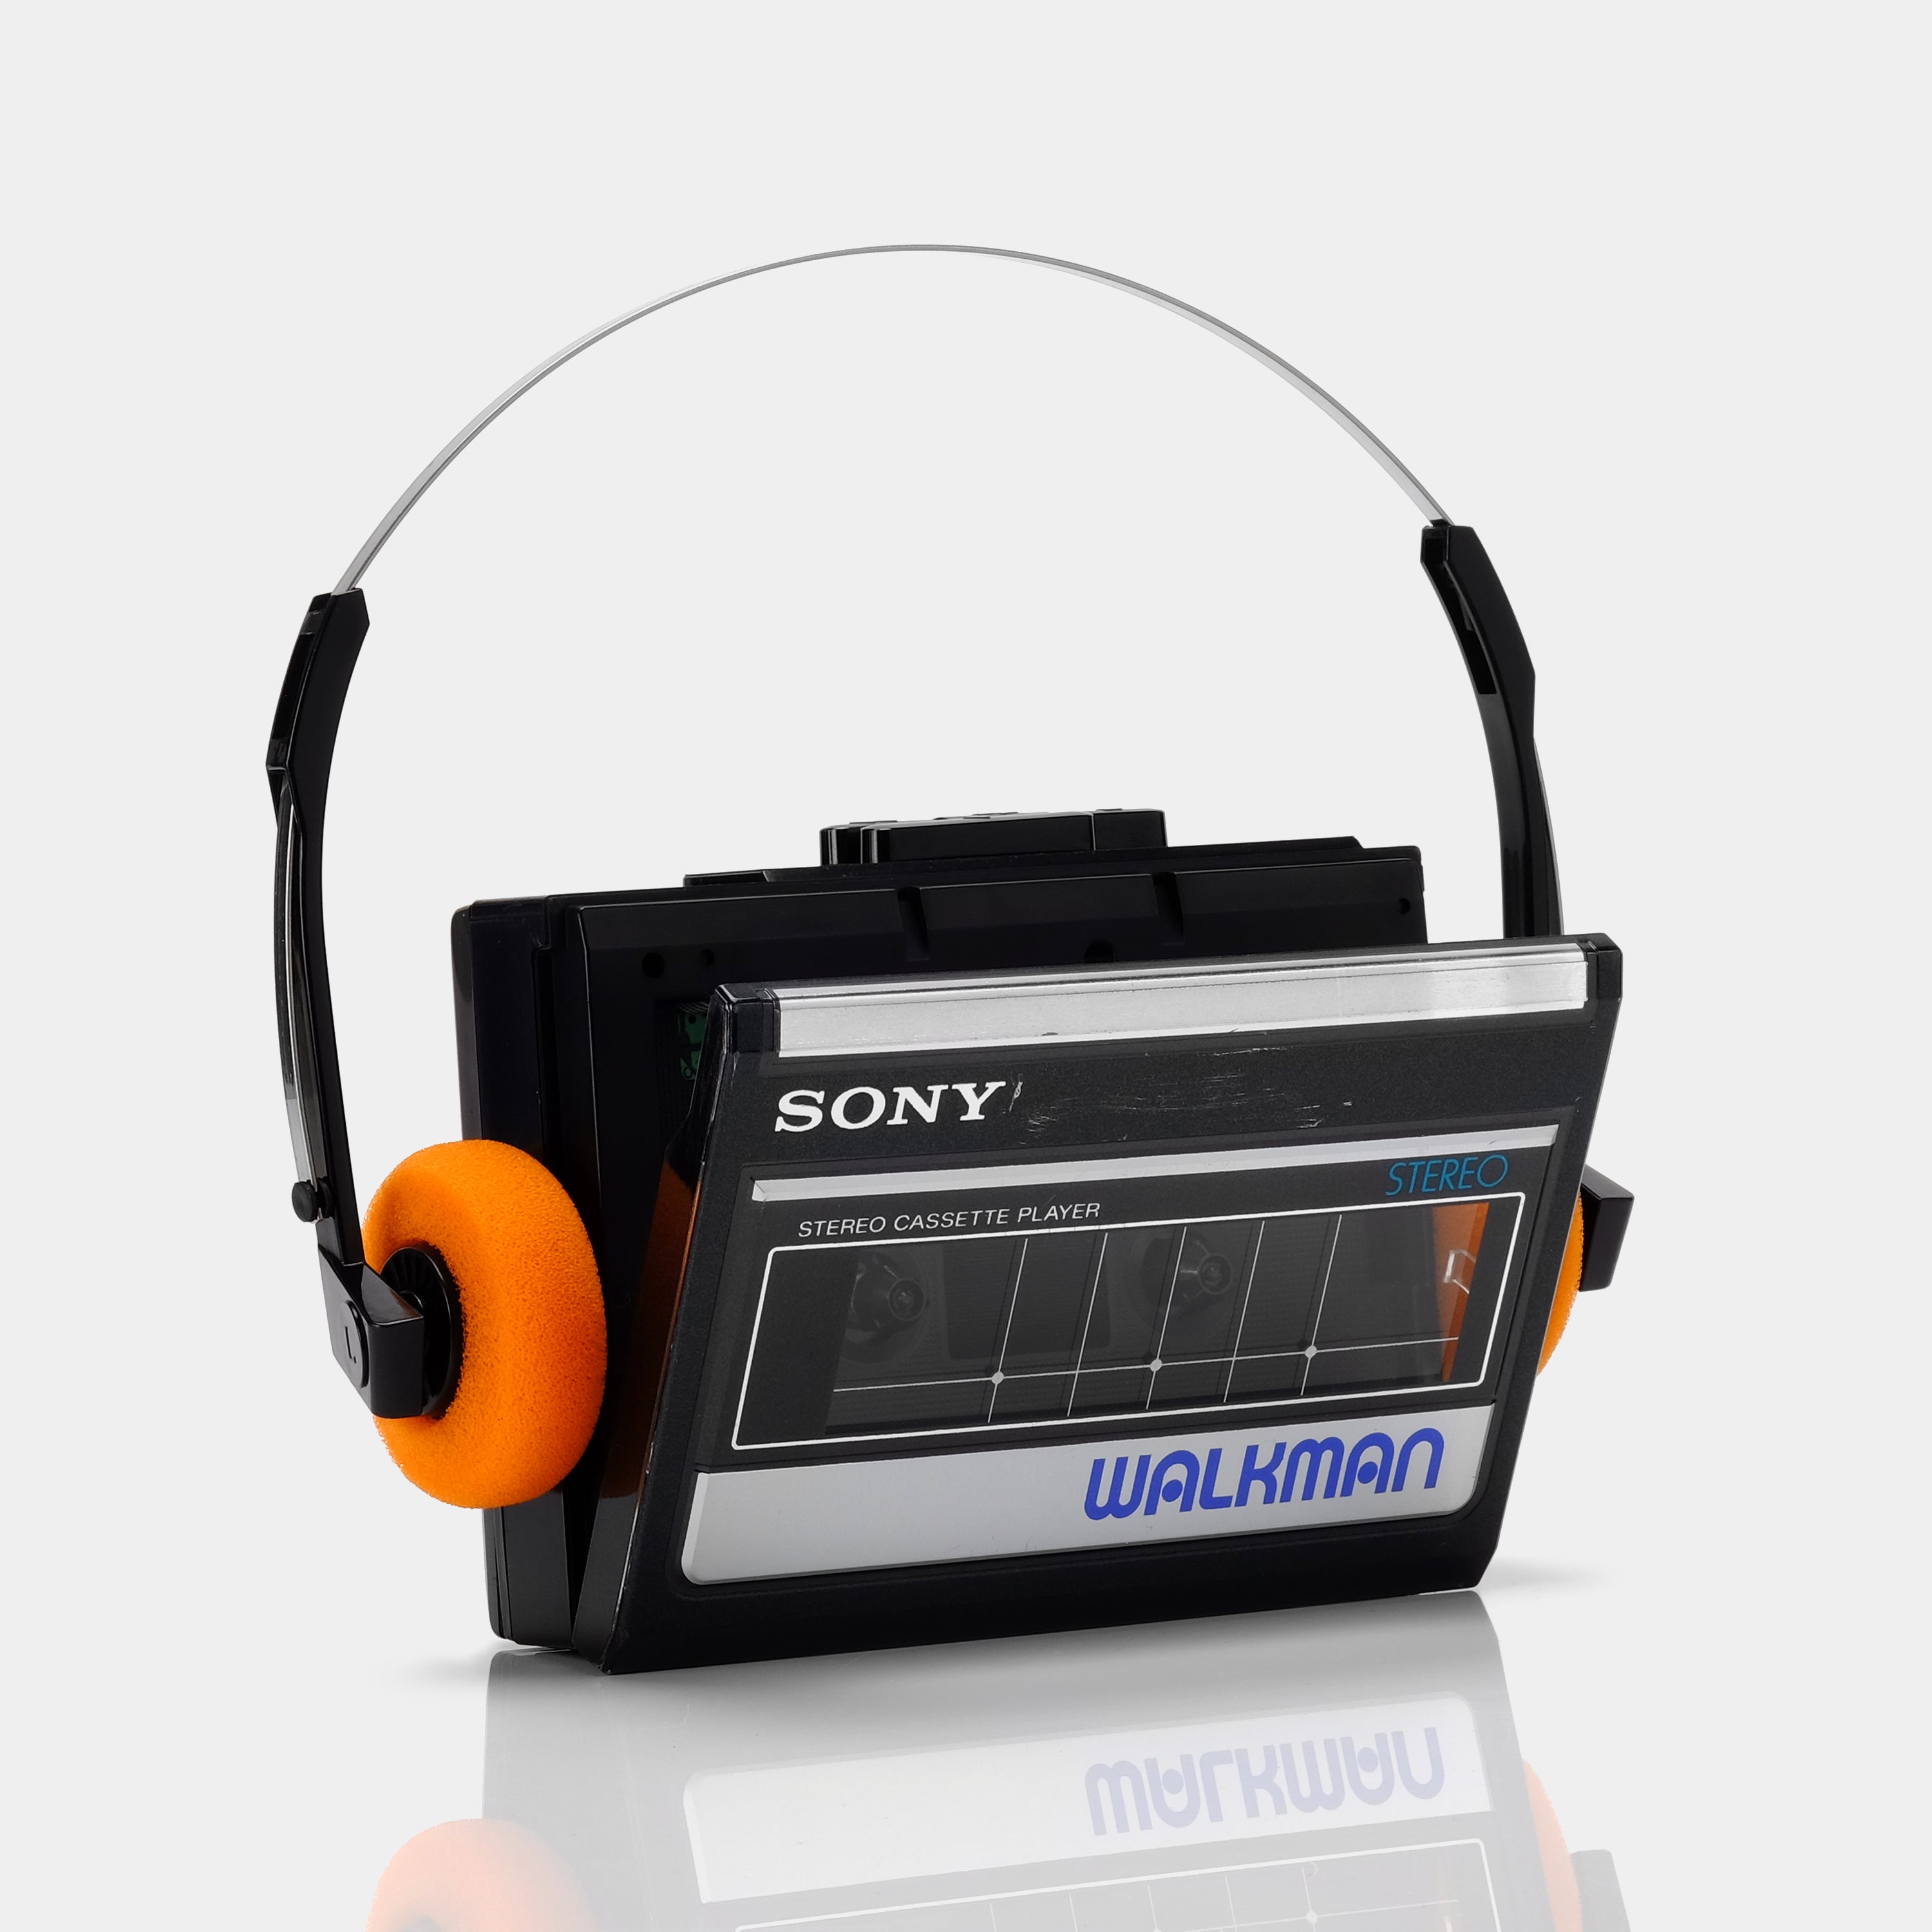 Sony Walkman WM-32 Portable Cassette Player